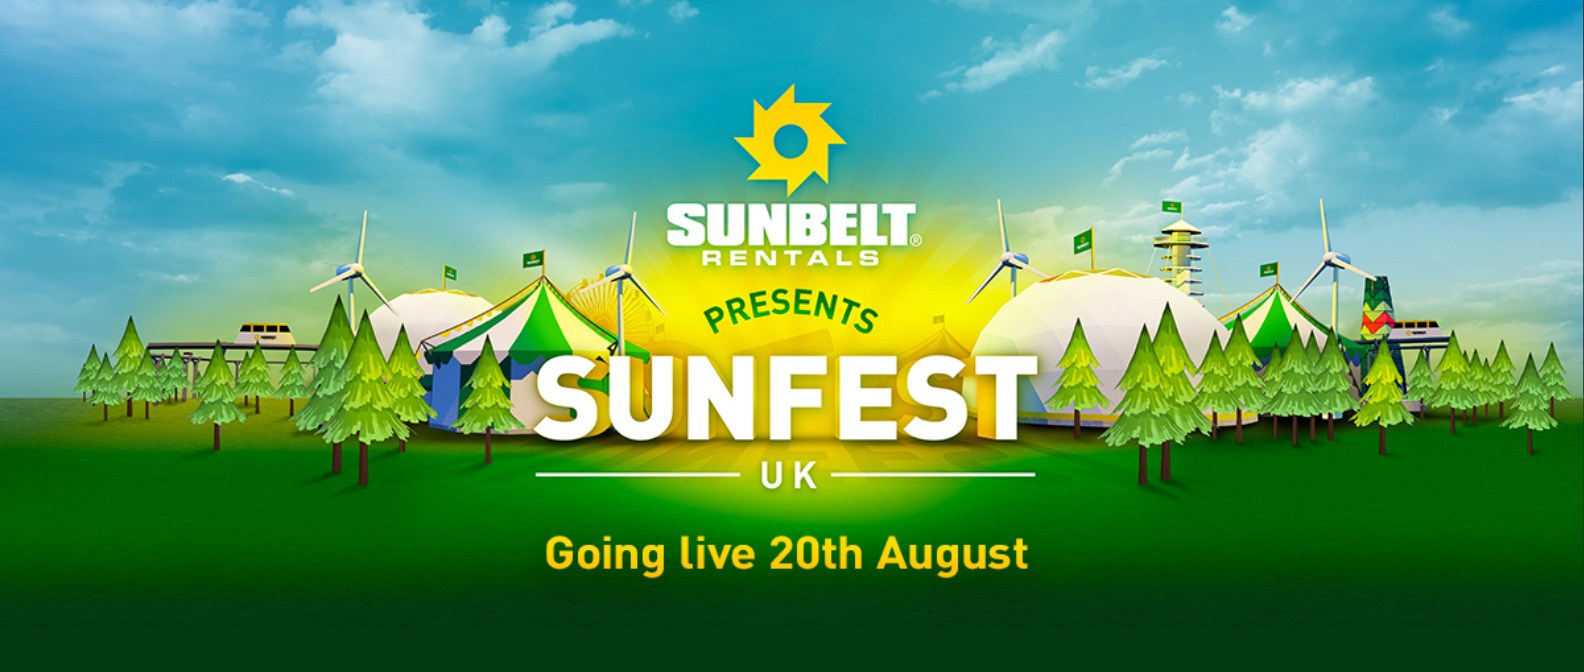 Sunfest banner